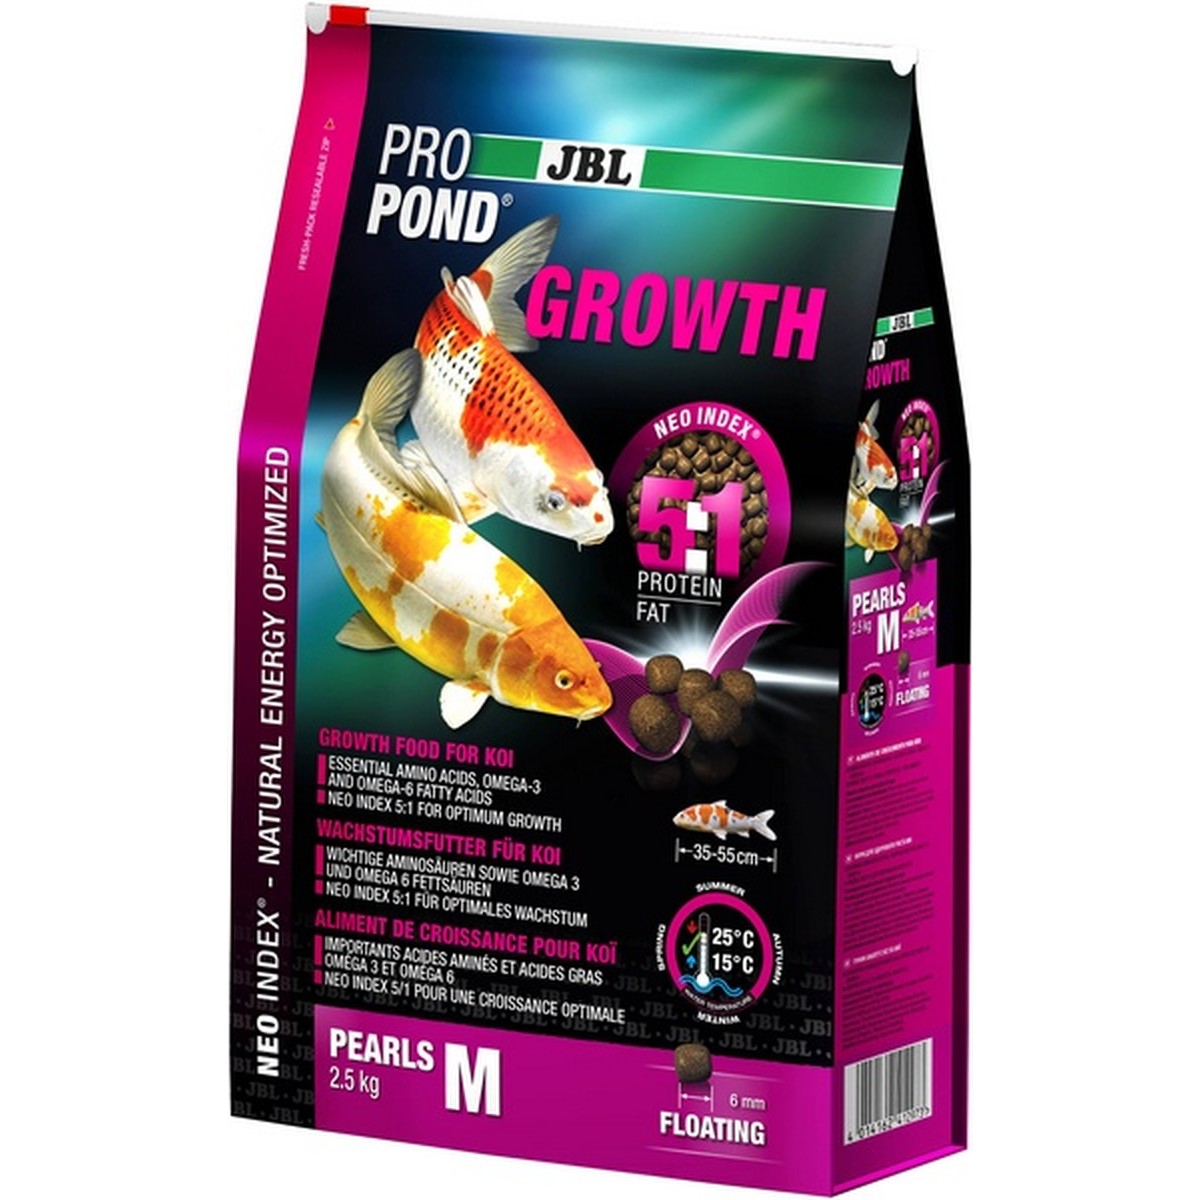   JBL ProPond Growth M, 2,5 kg  2.5kg